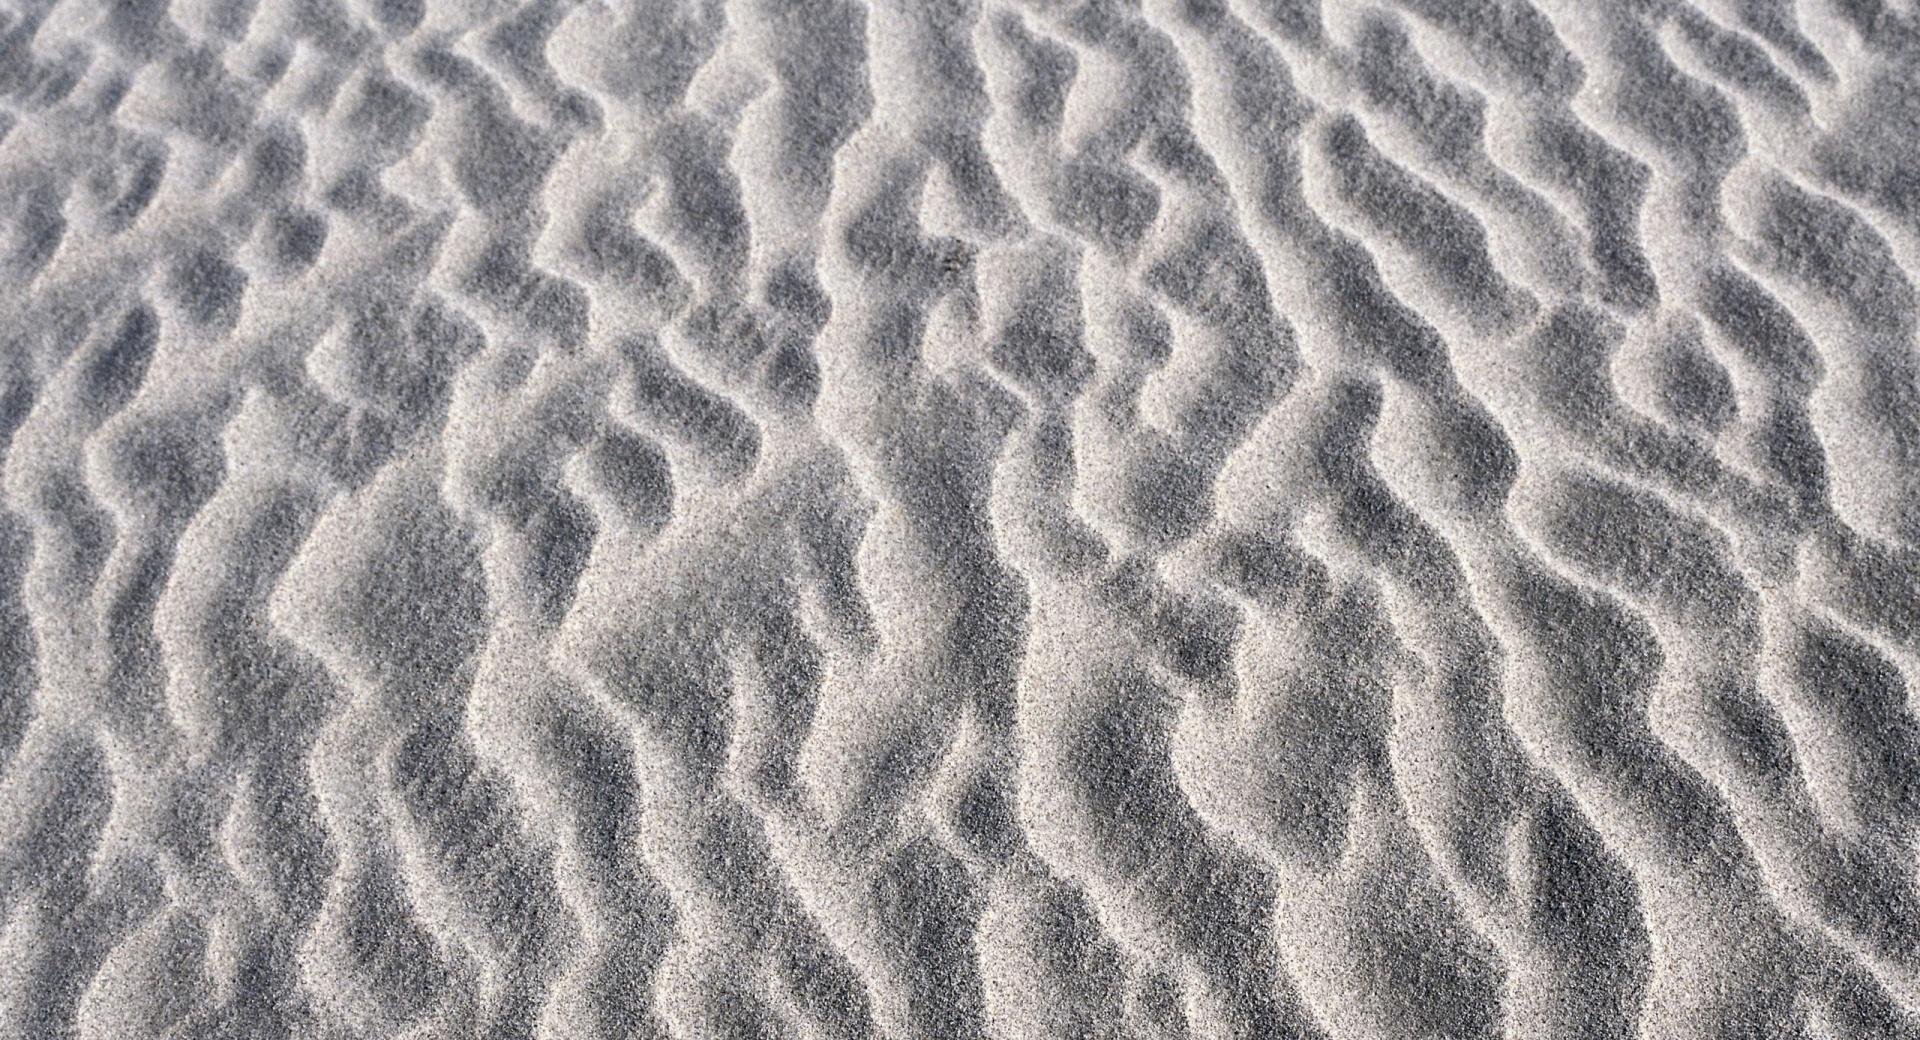 White Desert Sand wallpapers HD quality